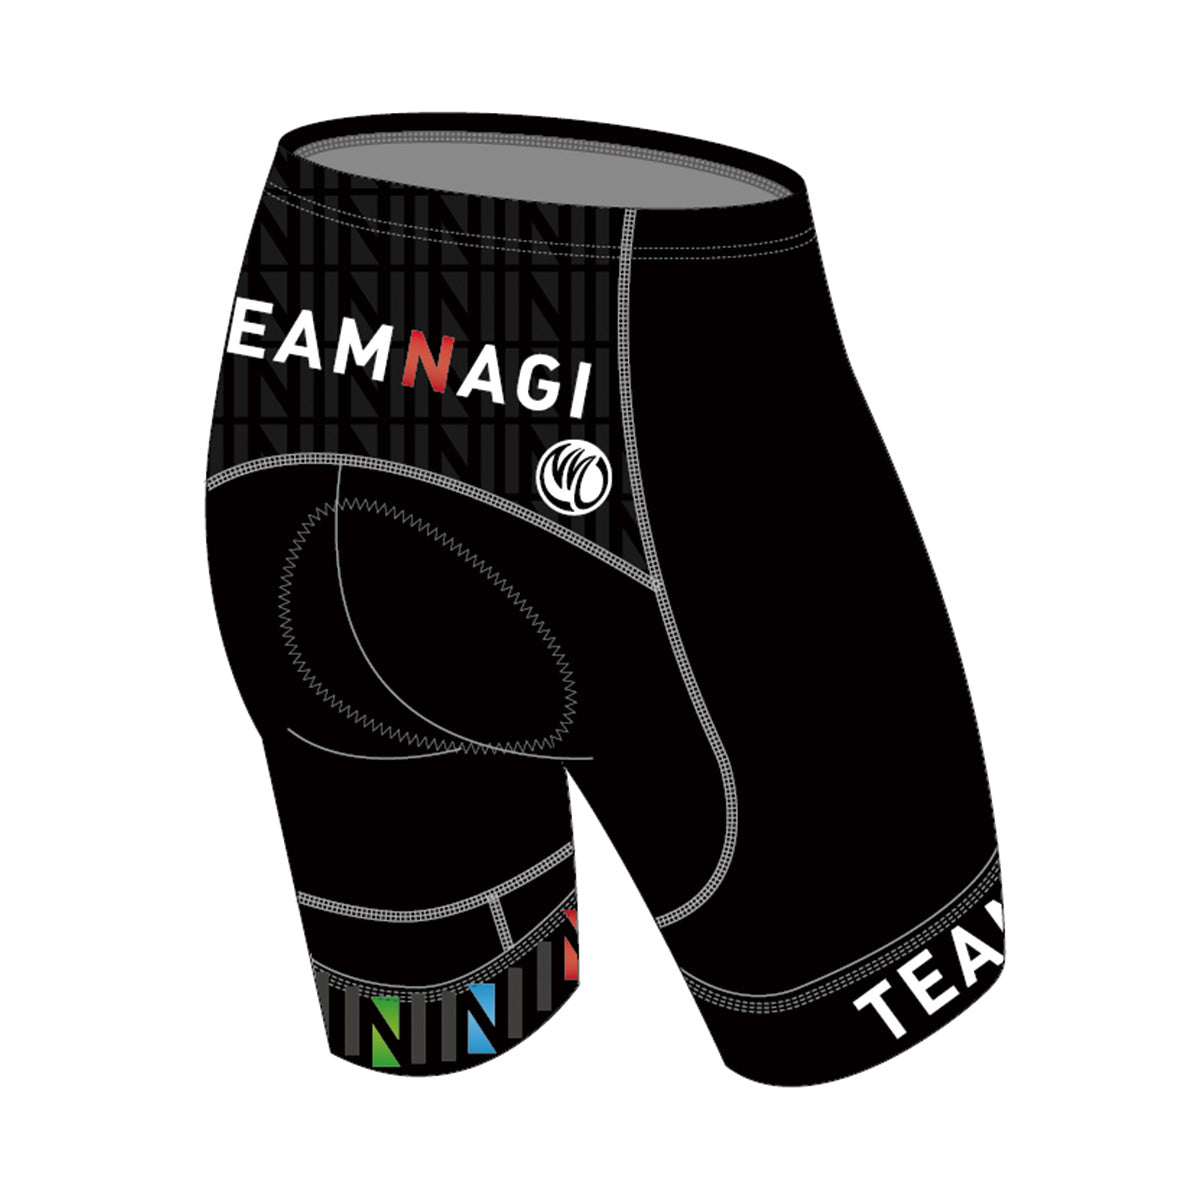 Team Nagi BLACK BRONZE Cycling Shorts